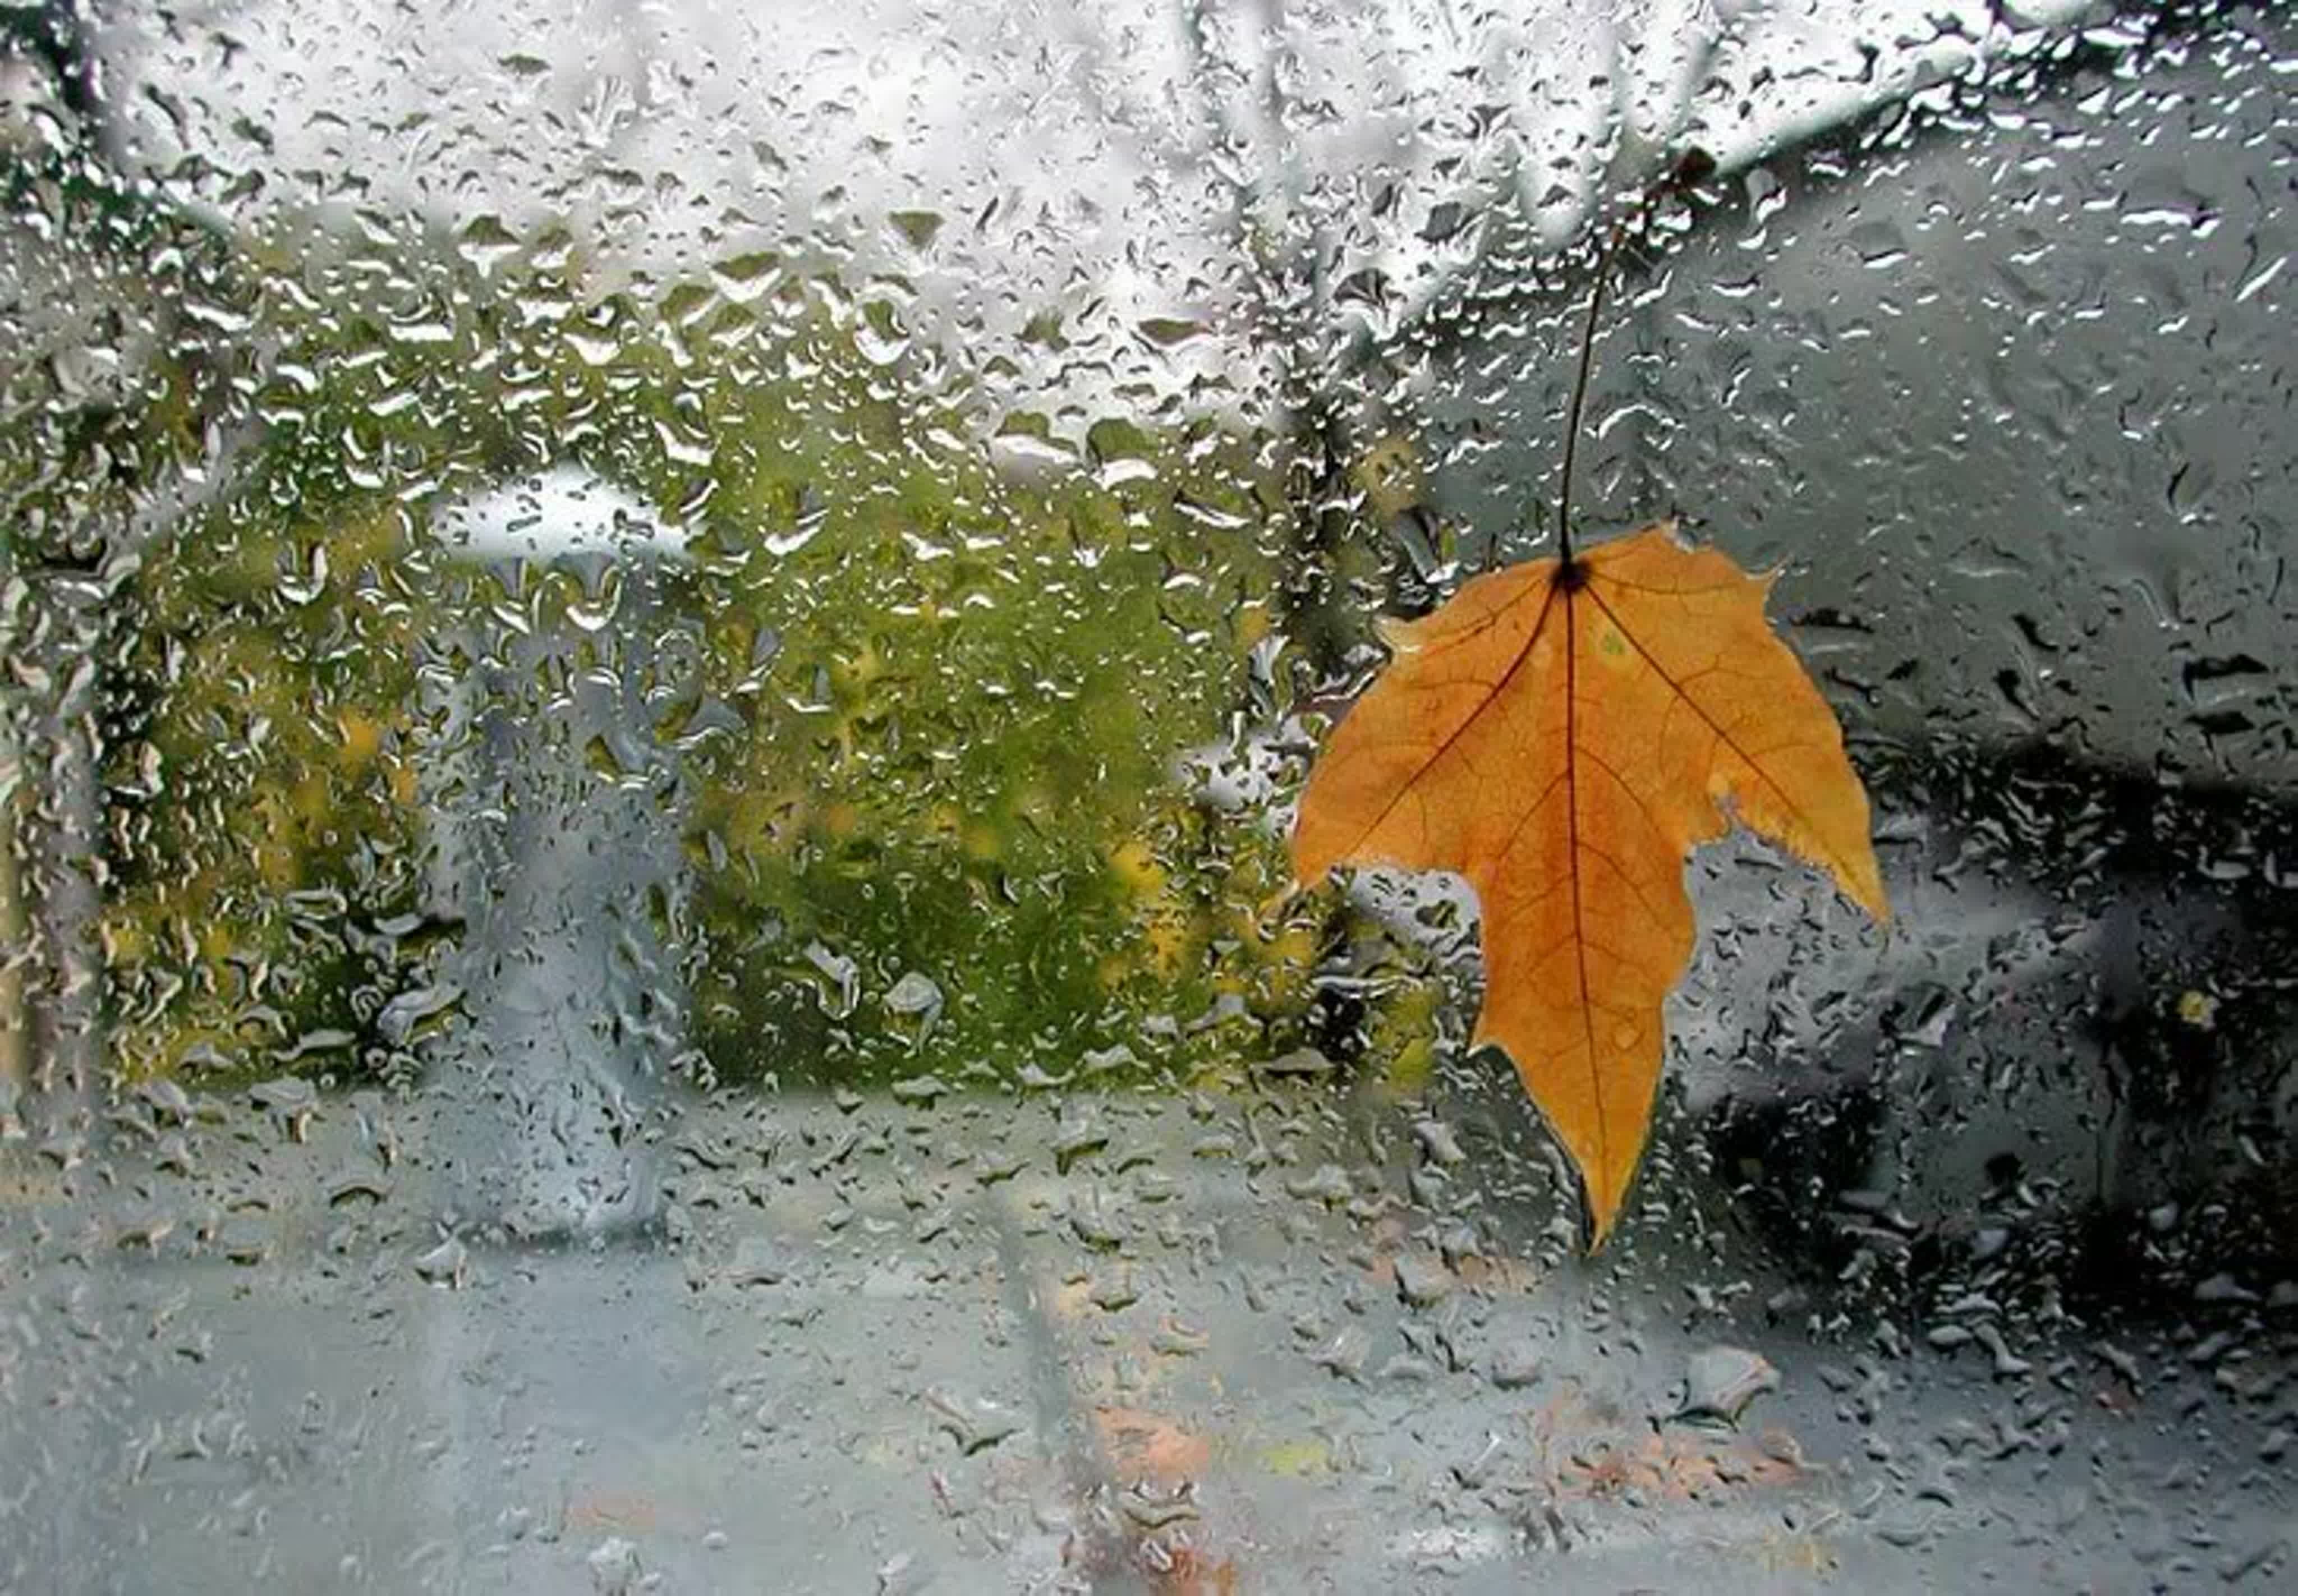 Осенняя музыка дождя. Дождливая осень. Осень дождь. Дождливая осень картинки. Осенний ливень.